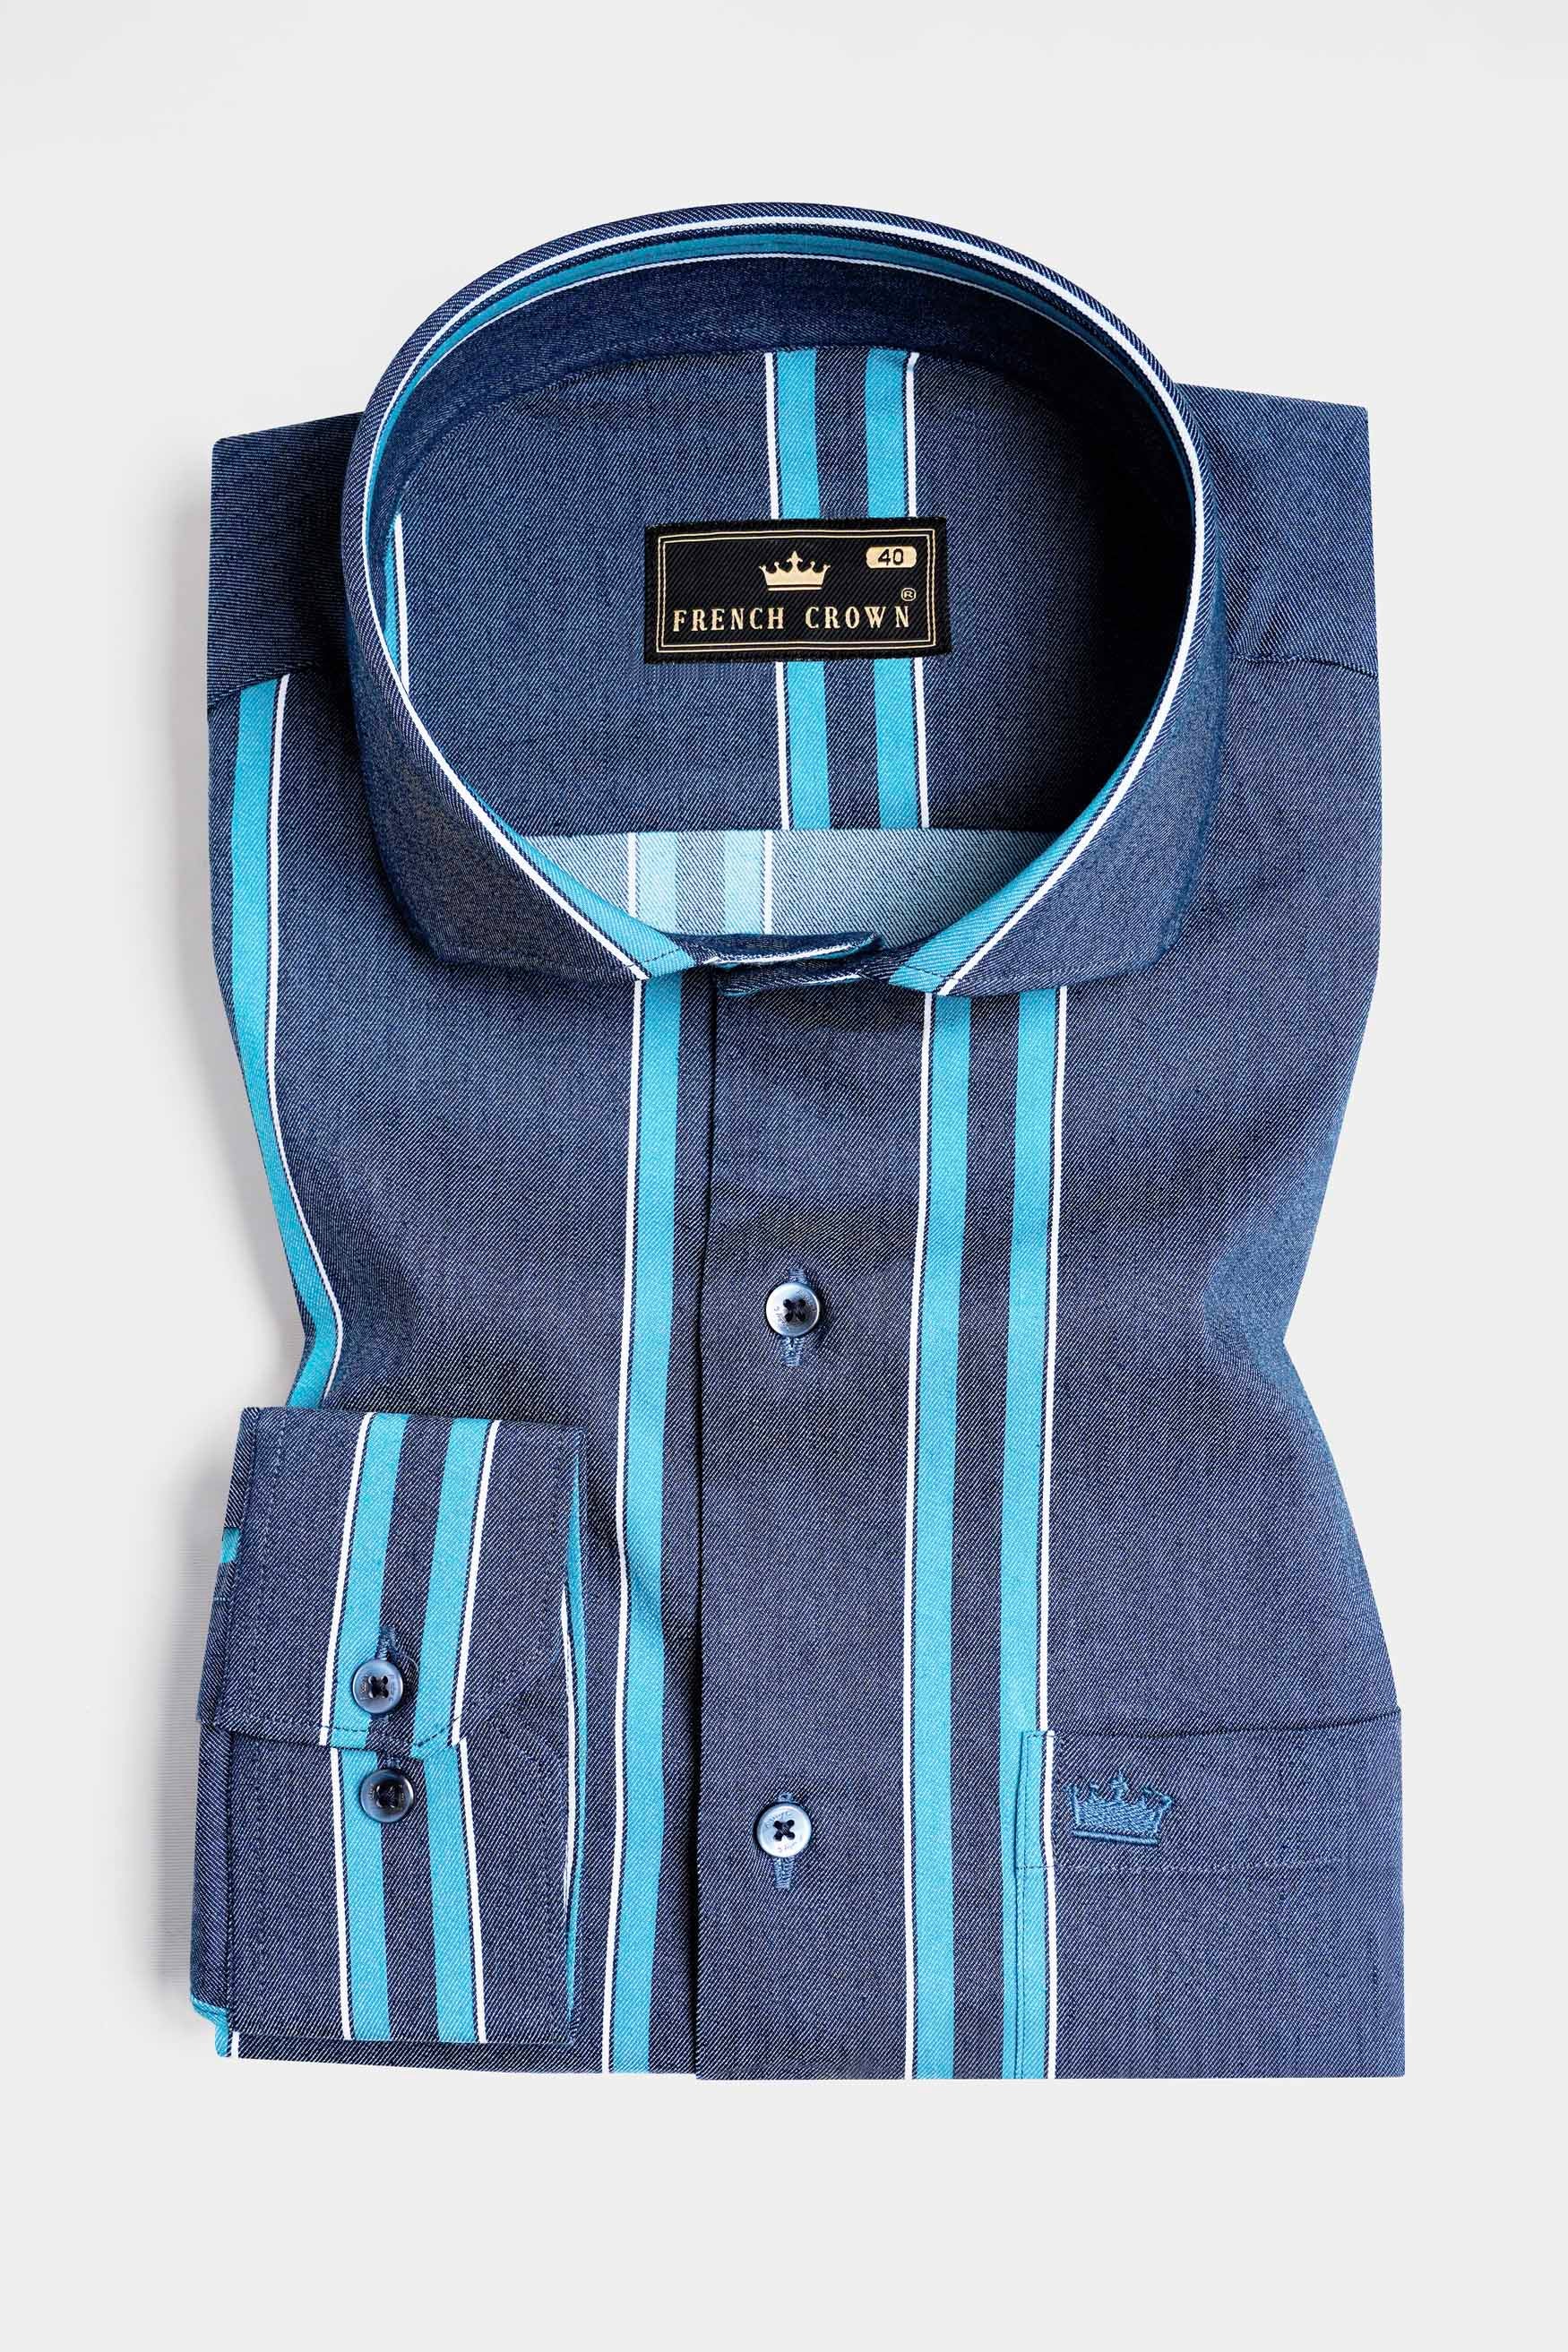 Fiord Blue and Cerulean Blue Striped Indigo Denim Shirt